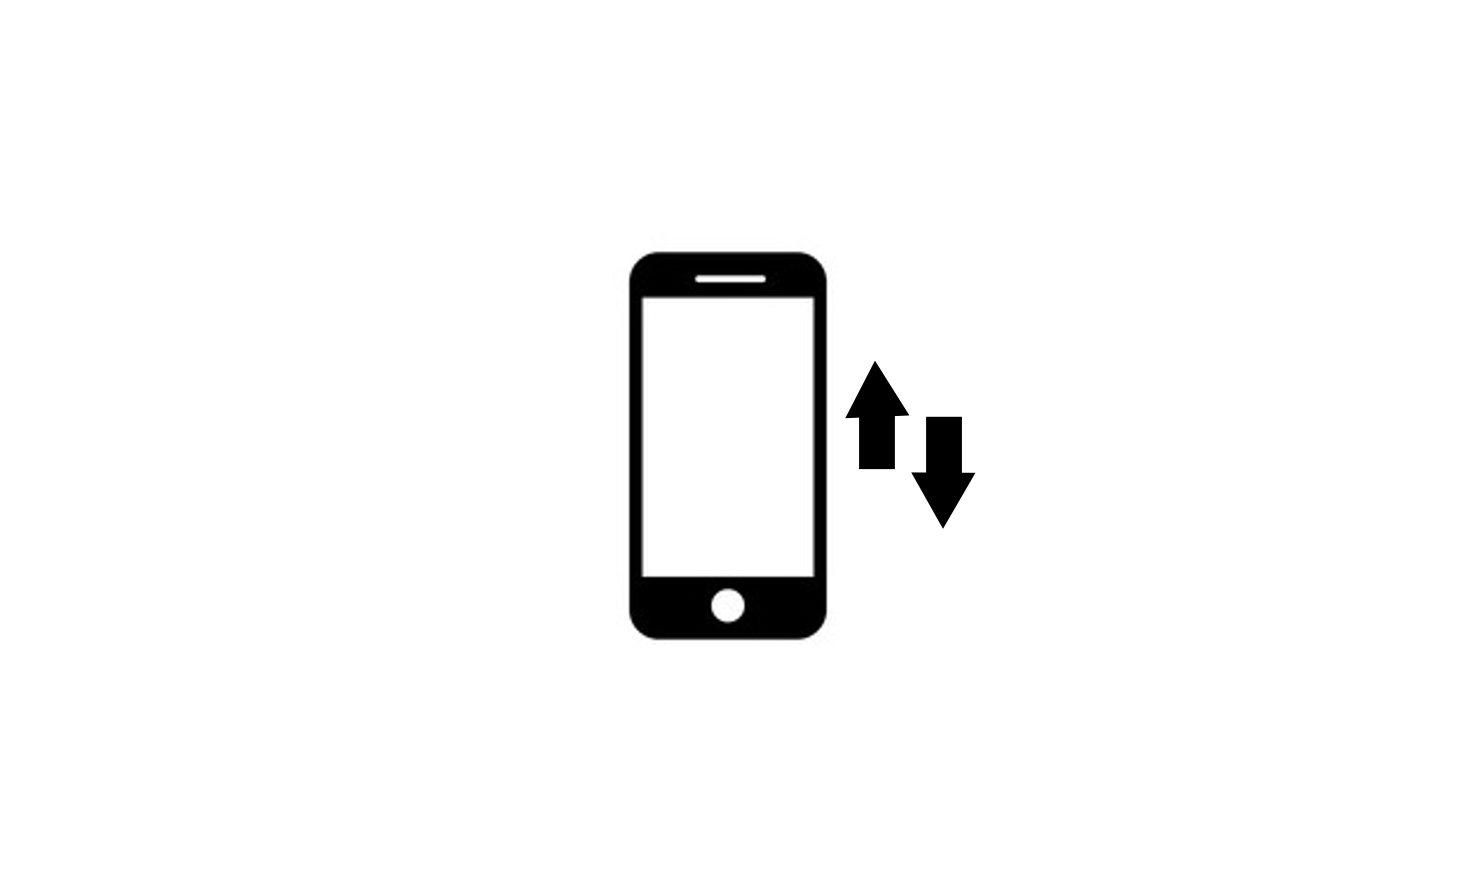 Configure APN in iOS devices